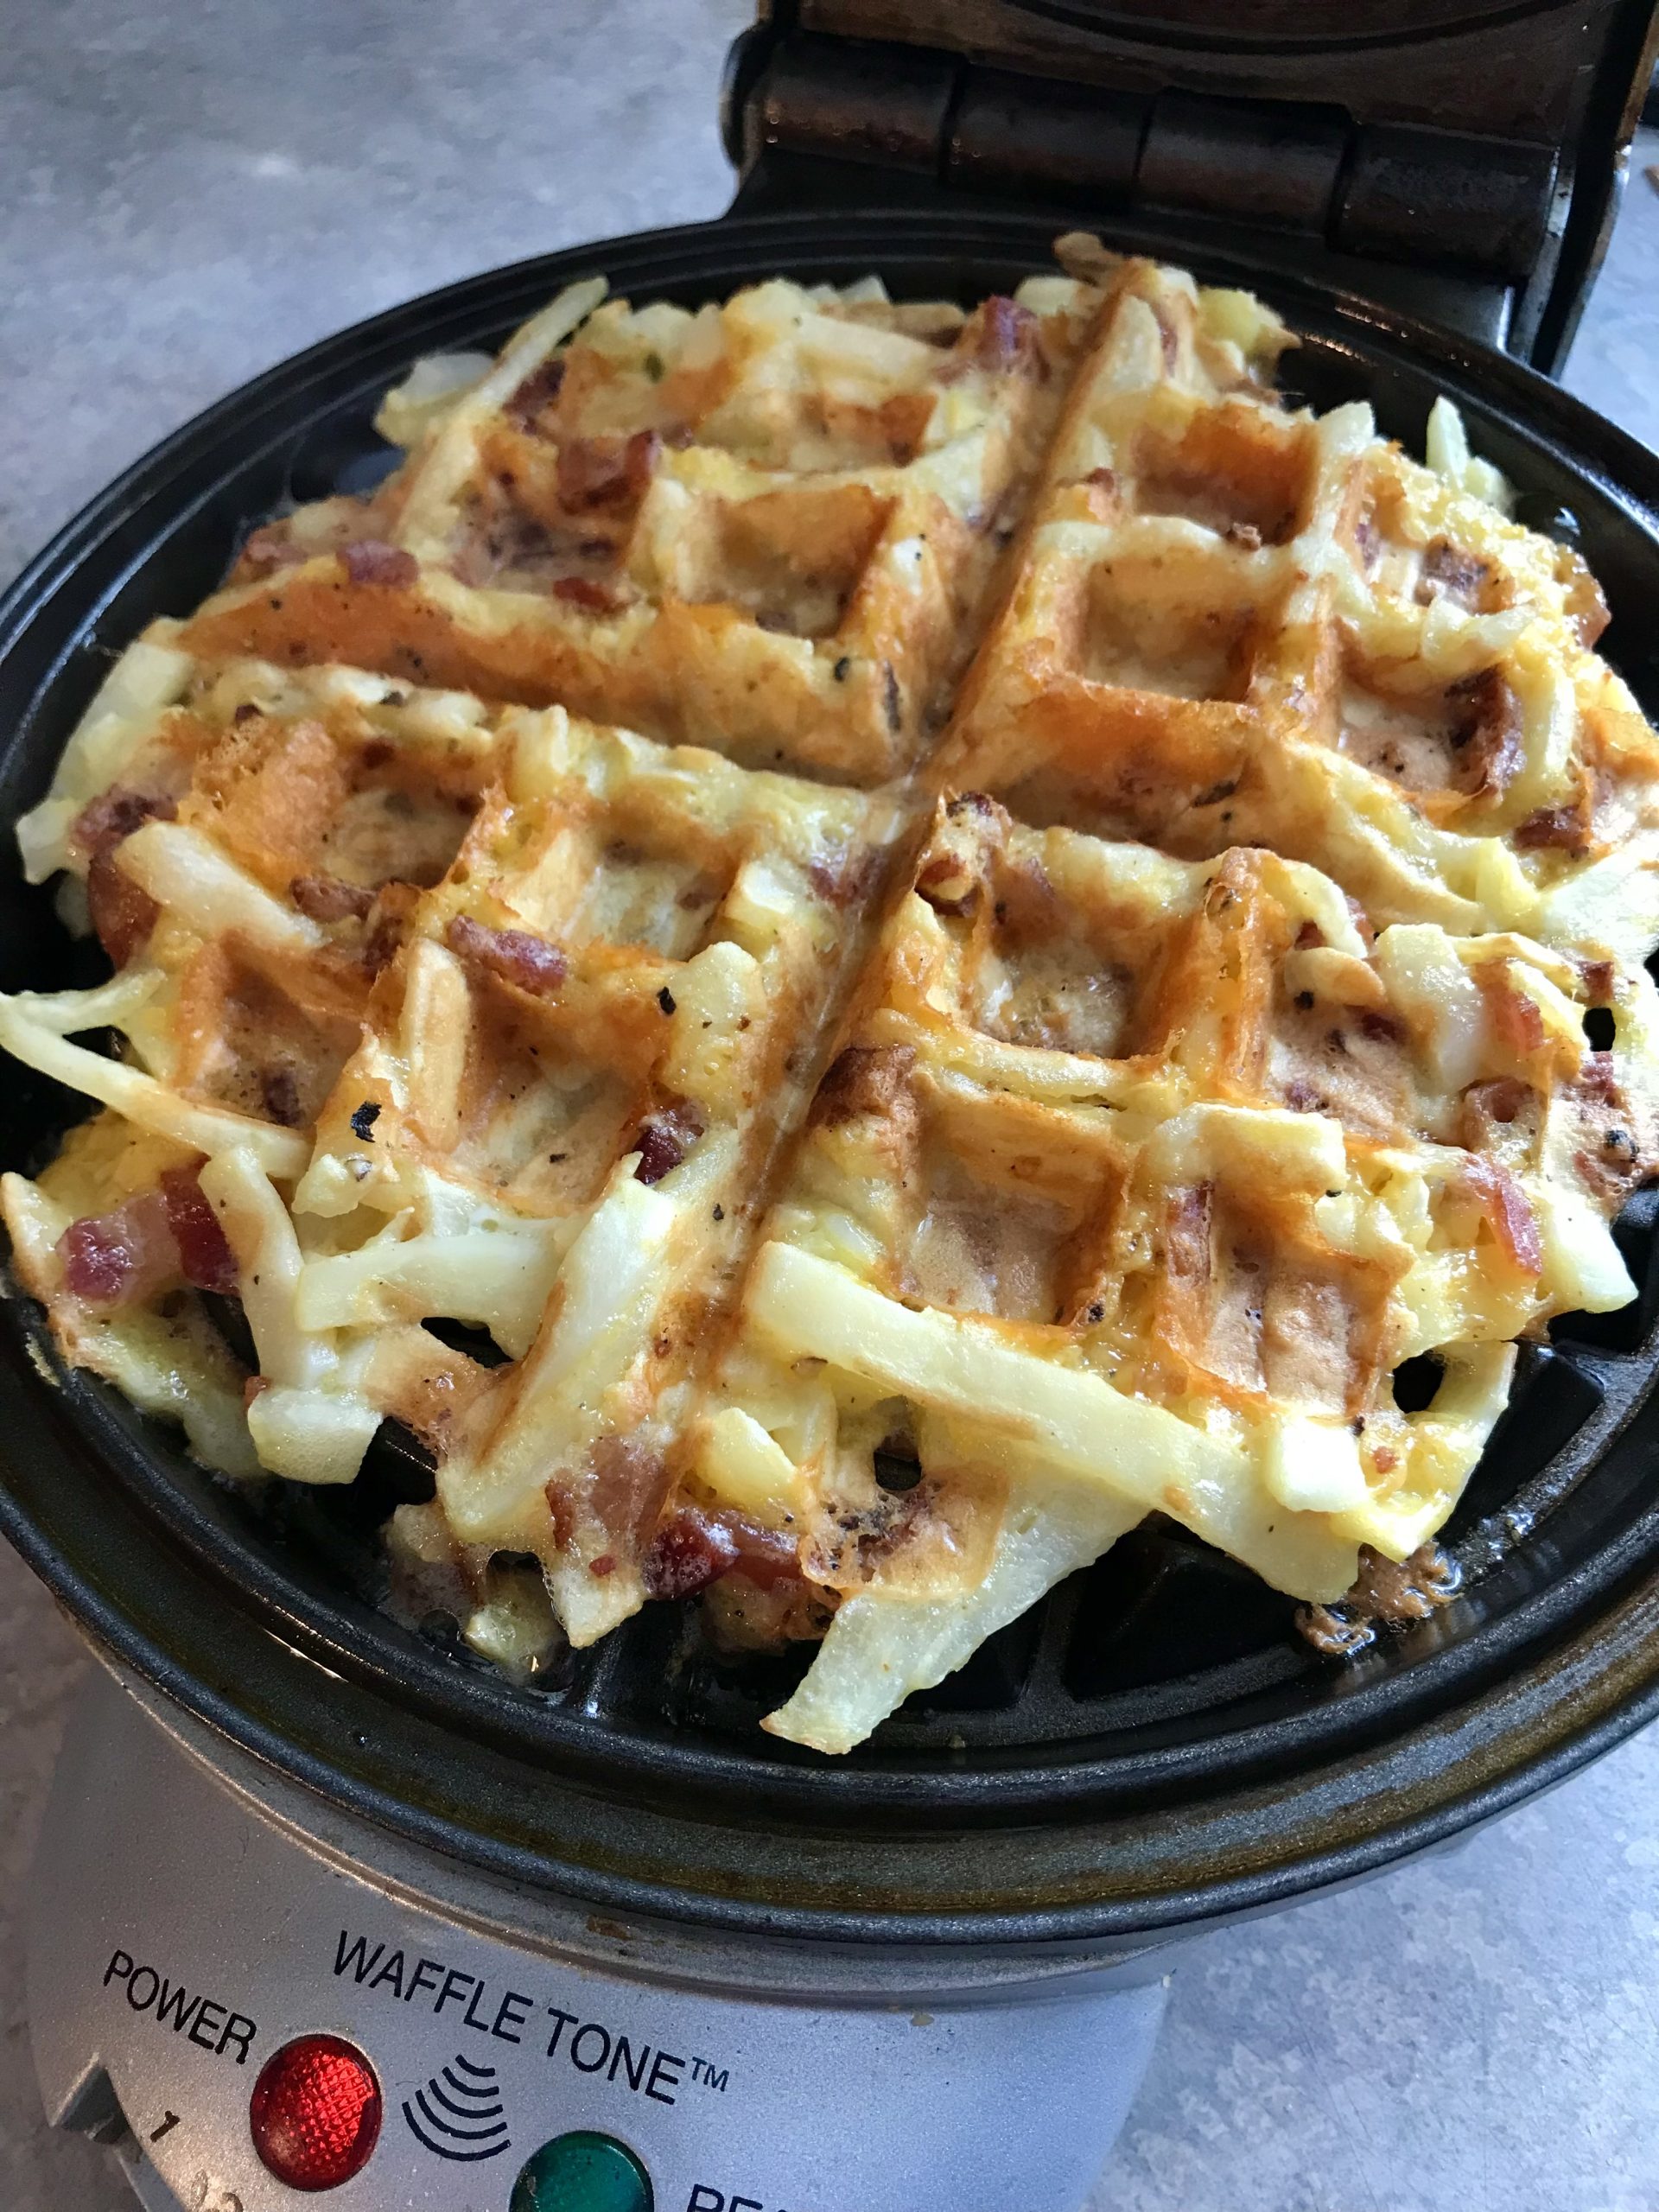 Waffle Iron Hash Browns Recipe